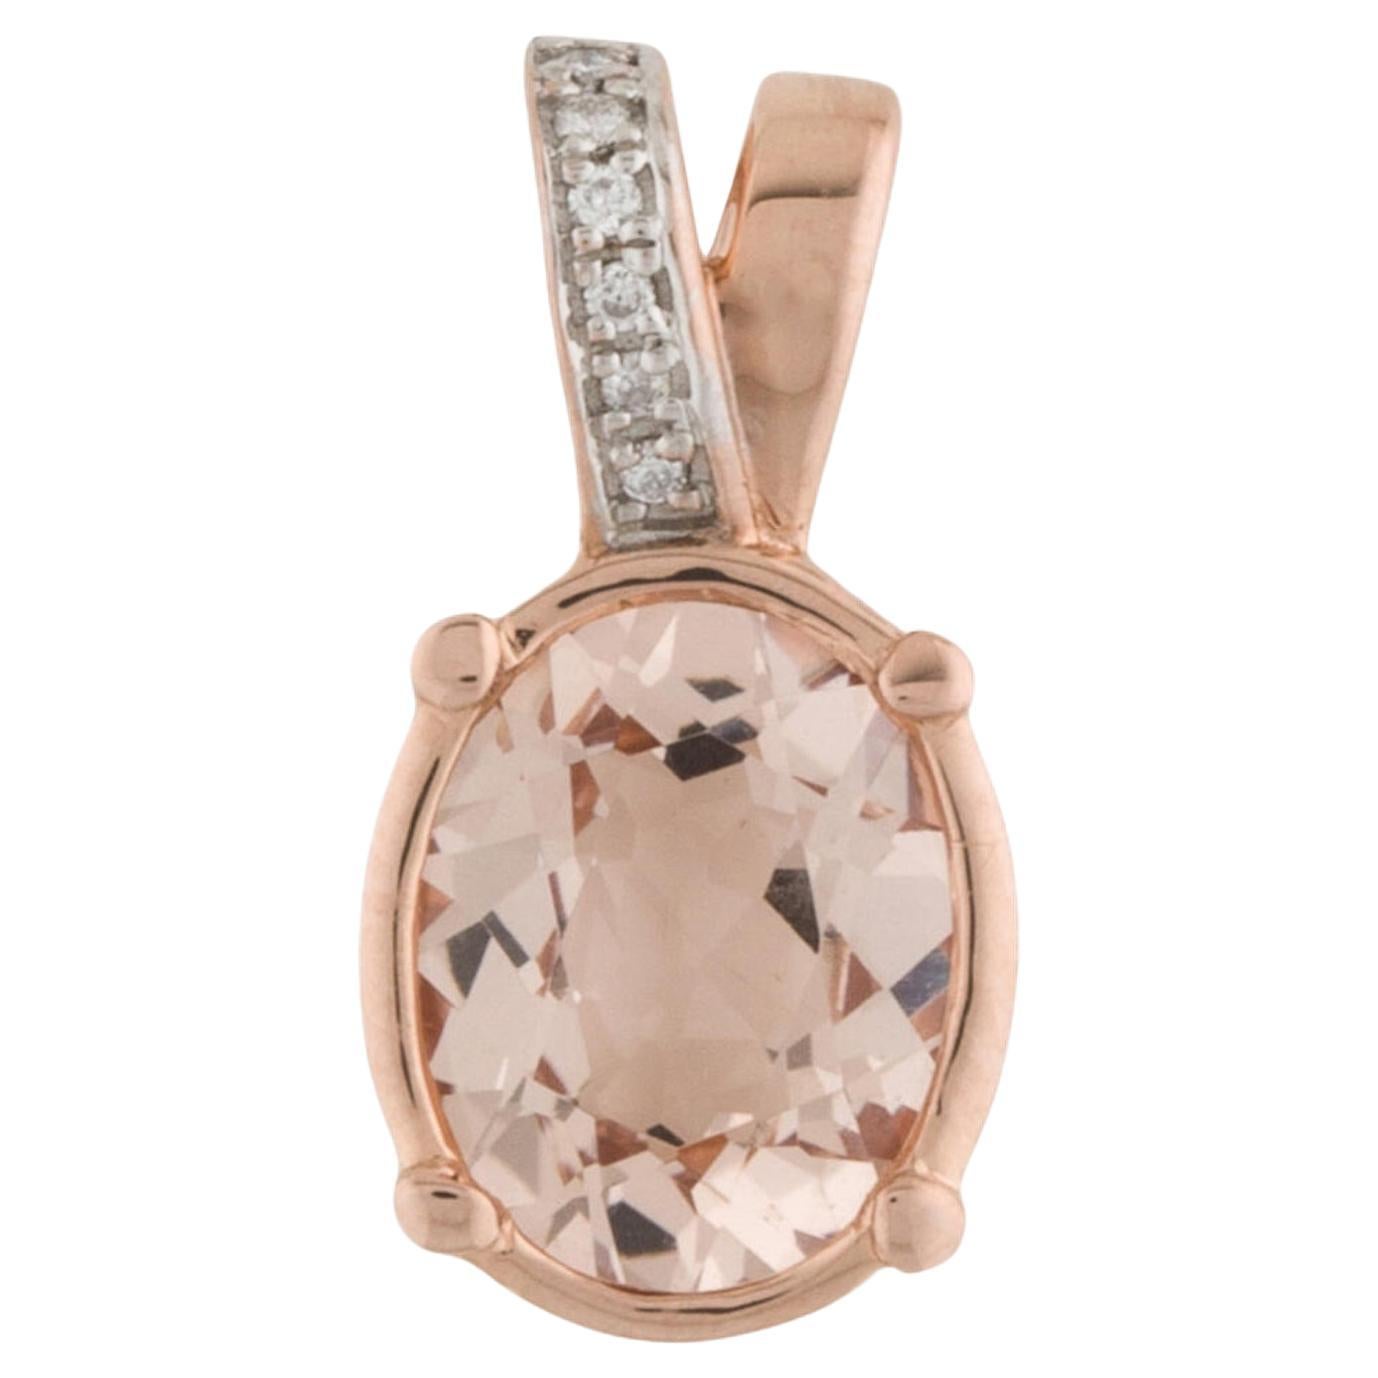 Luxurious 14K Diamond & Morganite Pendant - Elegant Gemstone Statement Piece For Sale